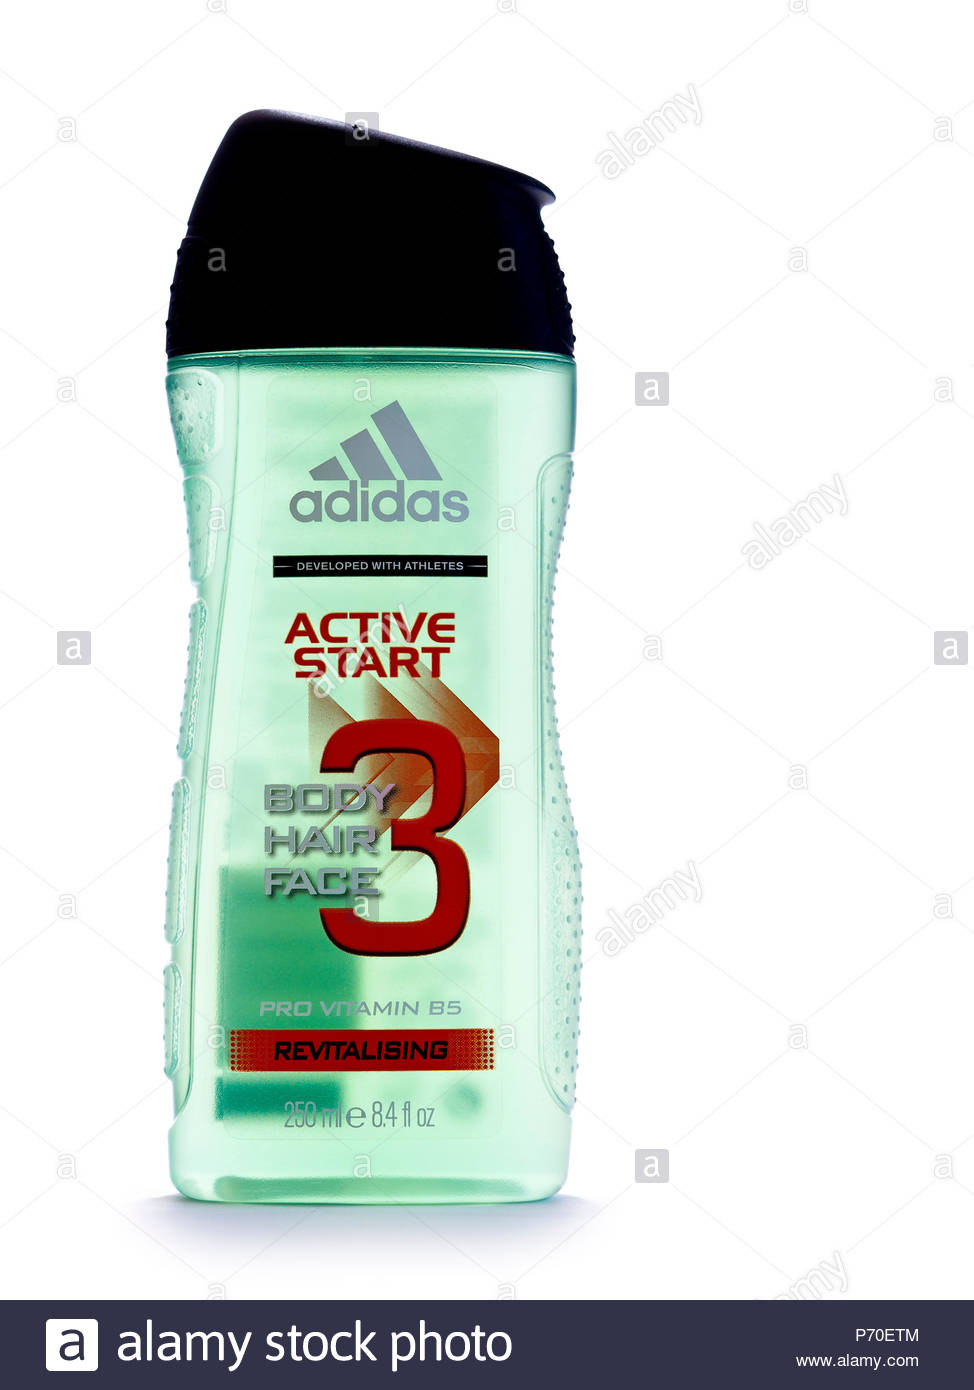 adidas active start body wash